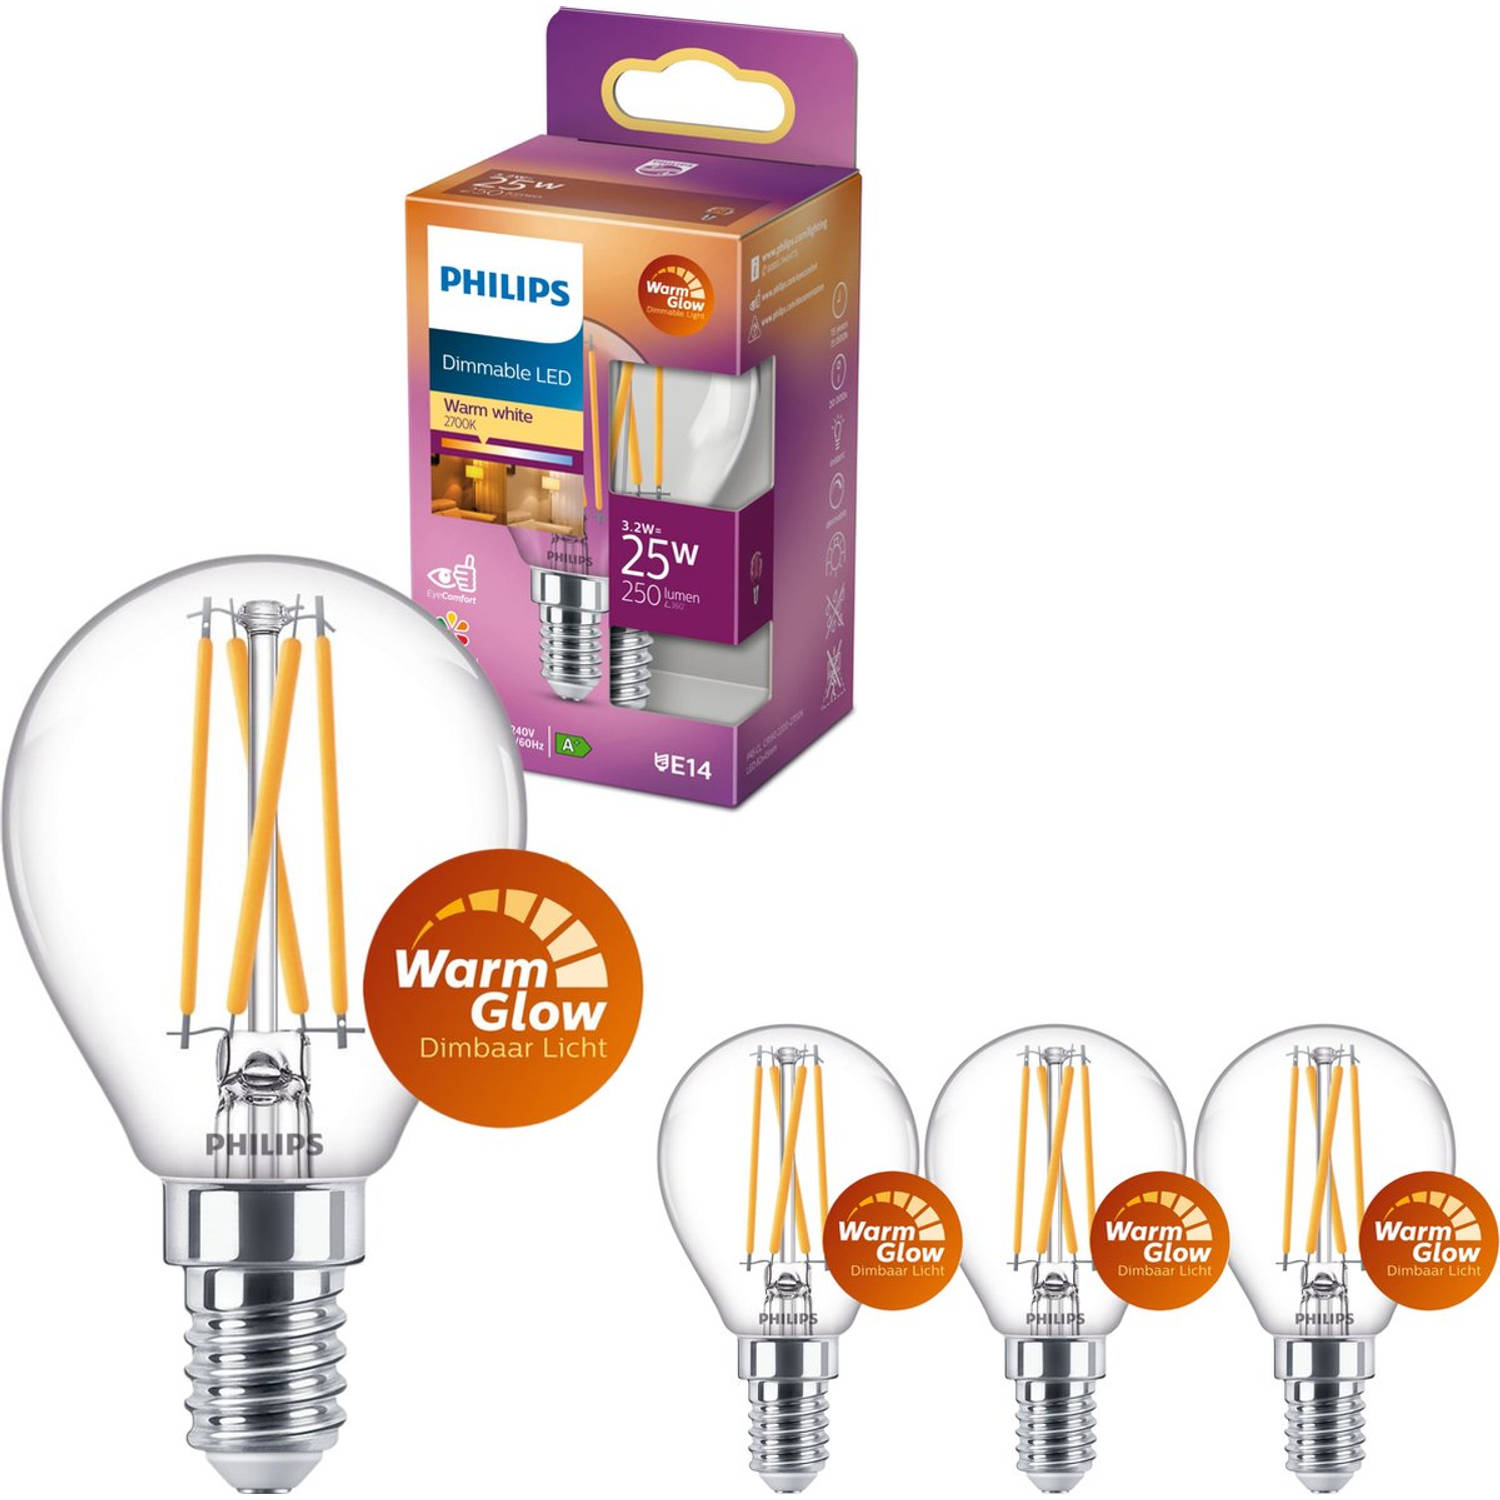 mei rooster regionaal Philips WarmGlow LED lampen Kogel E14 - Dimbaar naar extra warm wit - 3.2W  vervangt 25W - 4 Kogellampen | Blokker